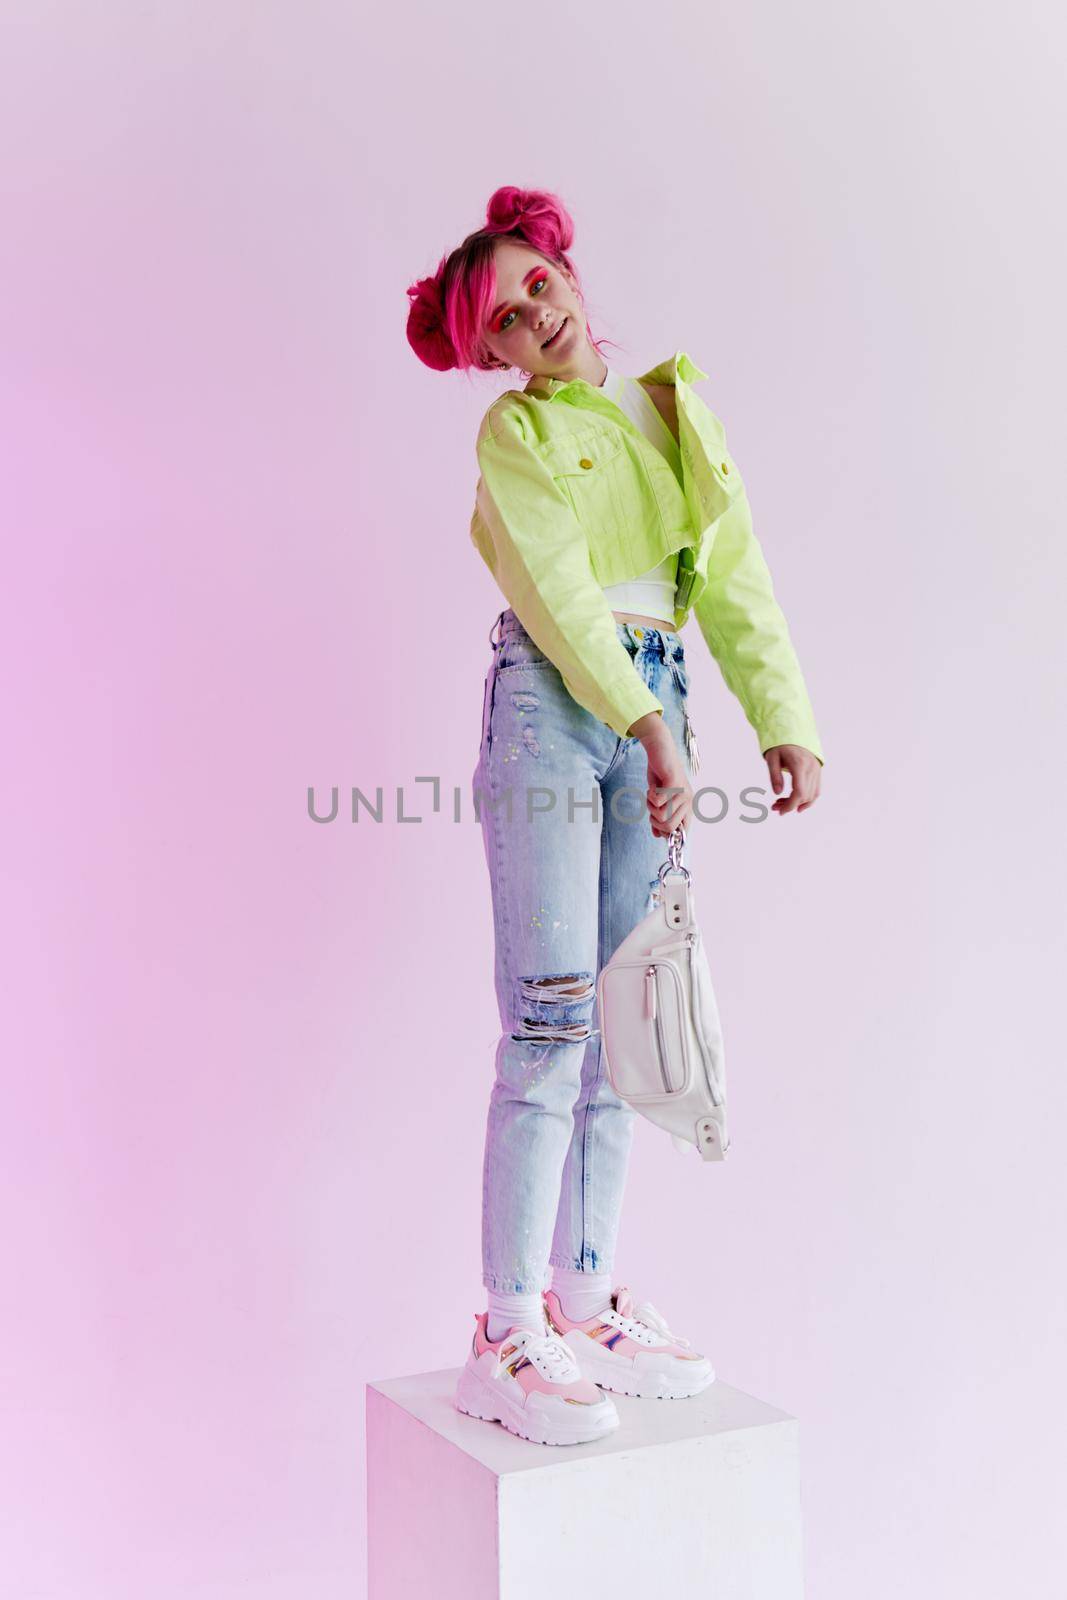 cheerful woman bright makeup posing poster stylish clothing by Vichizh